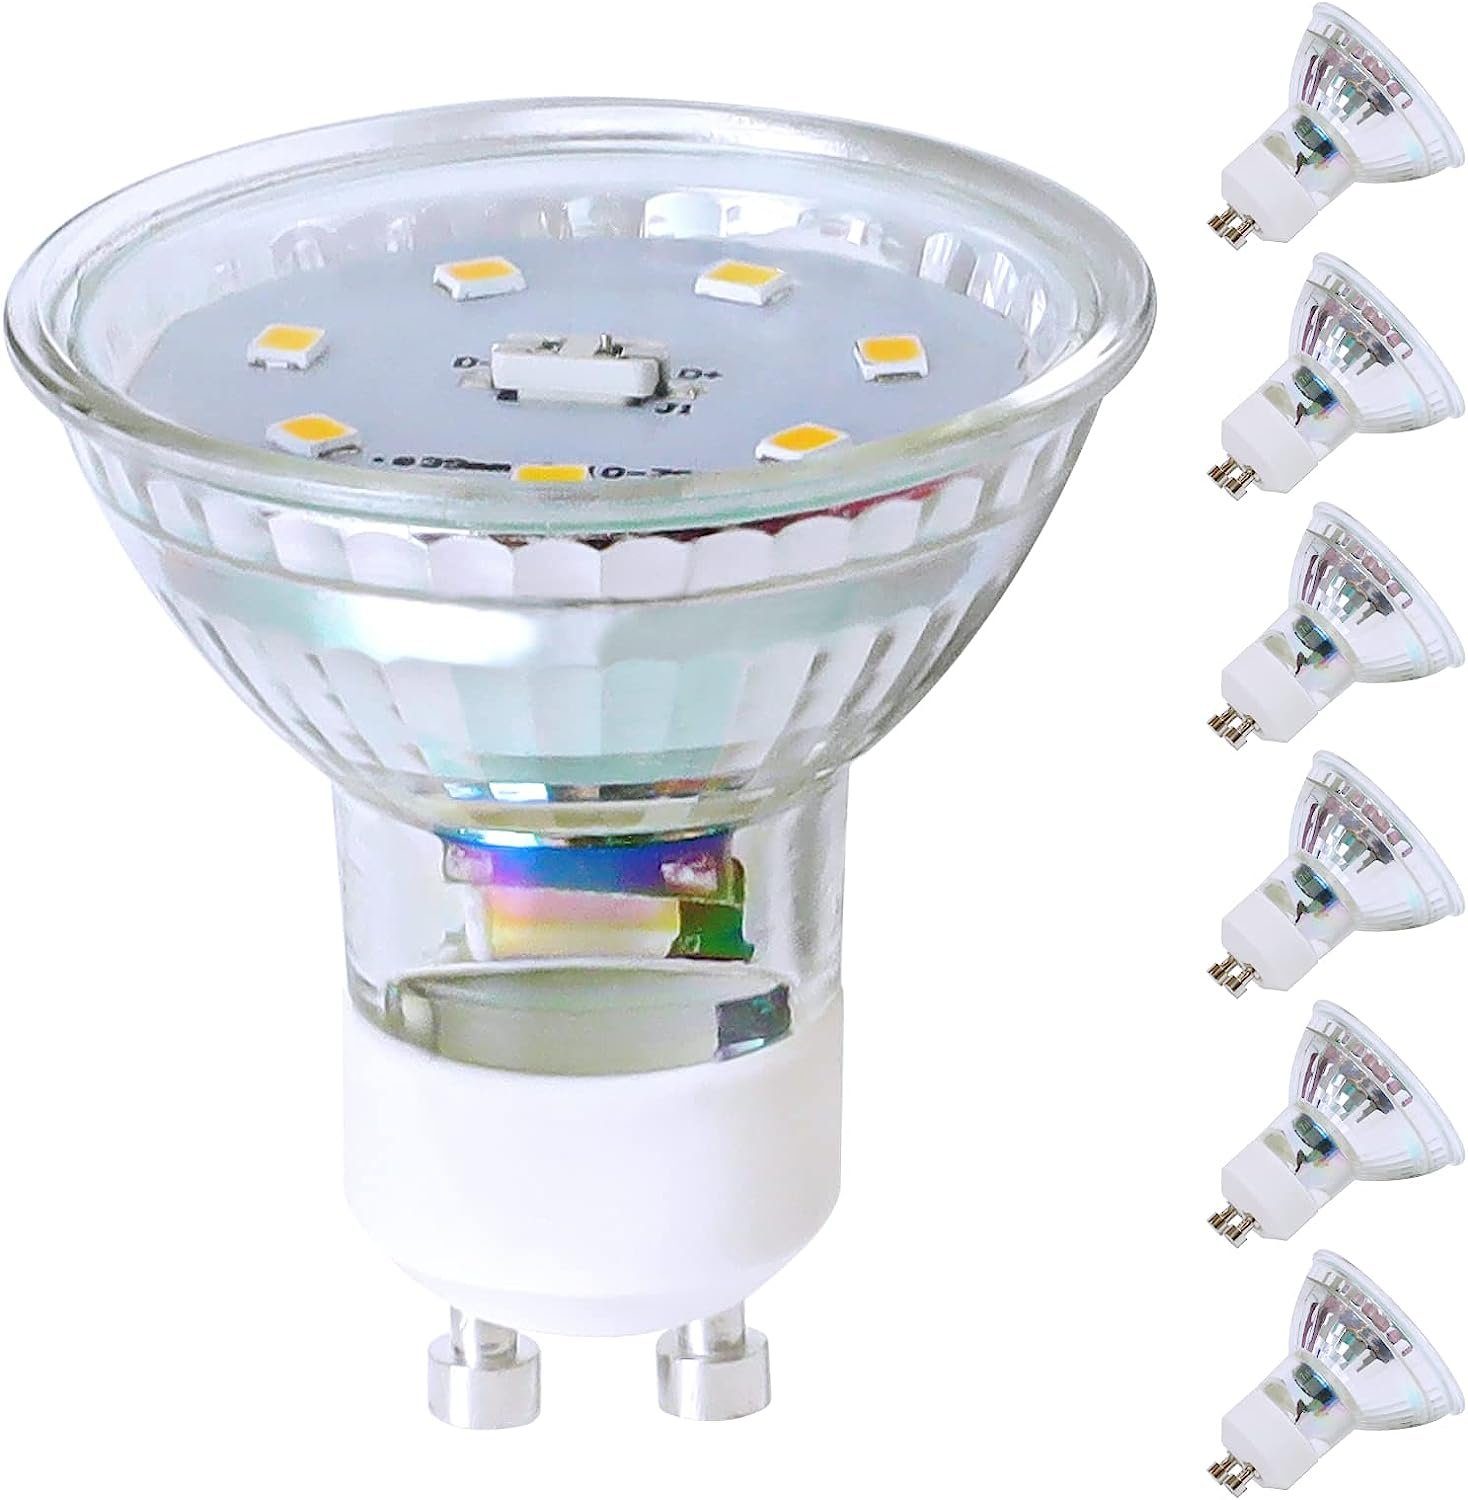 LED GU10 Glühlampe Glühbirne Leuchtmittel Spot 10W Spot 120